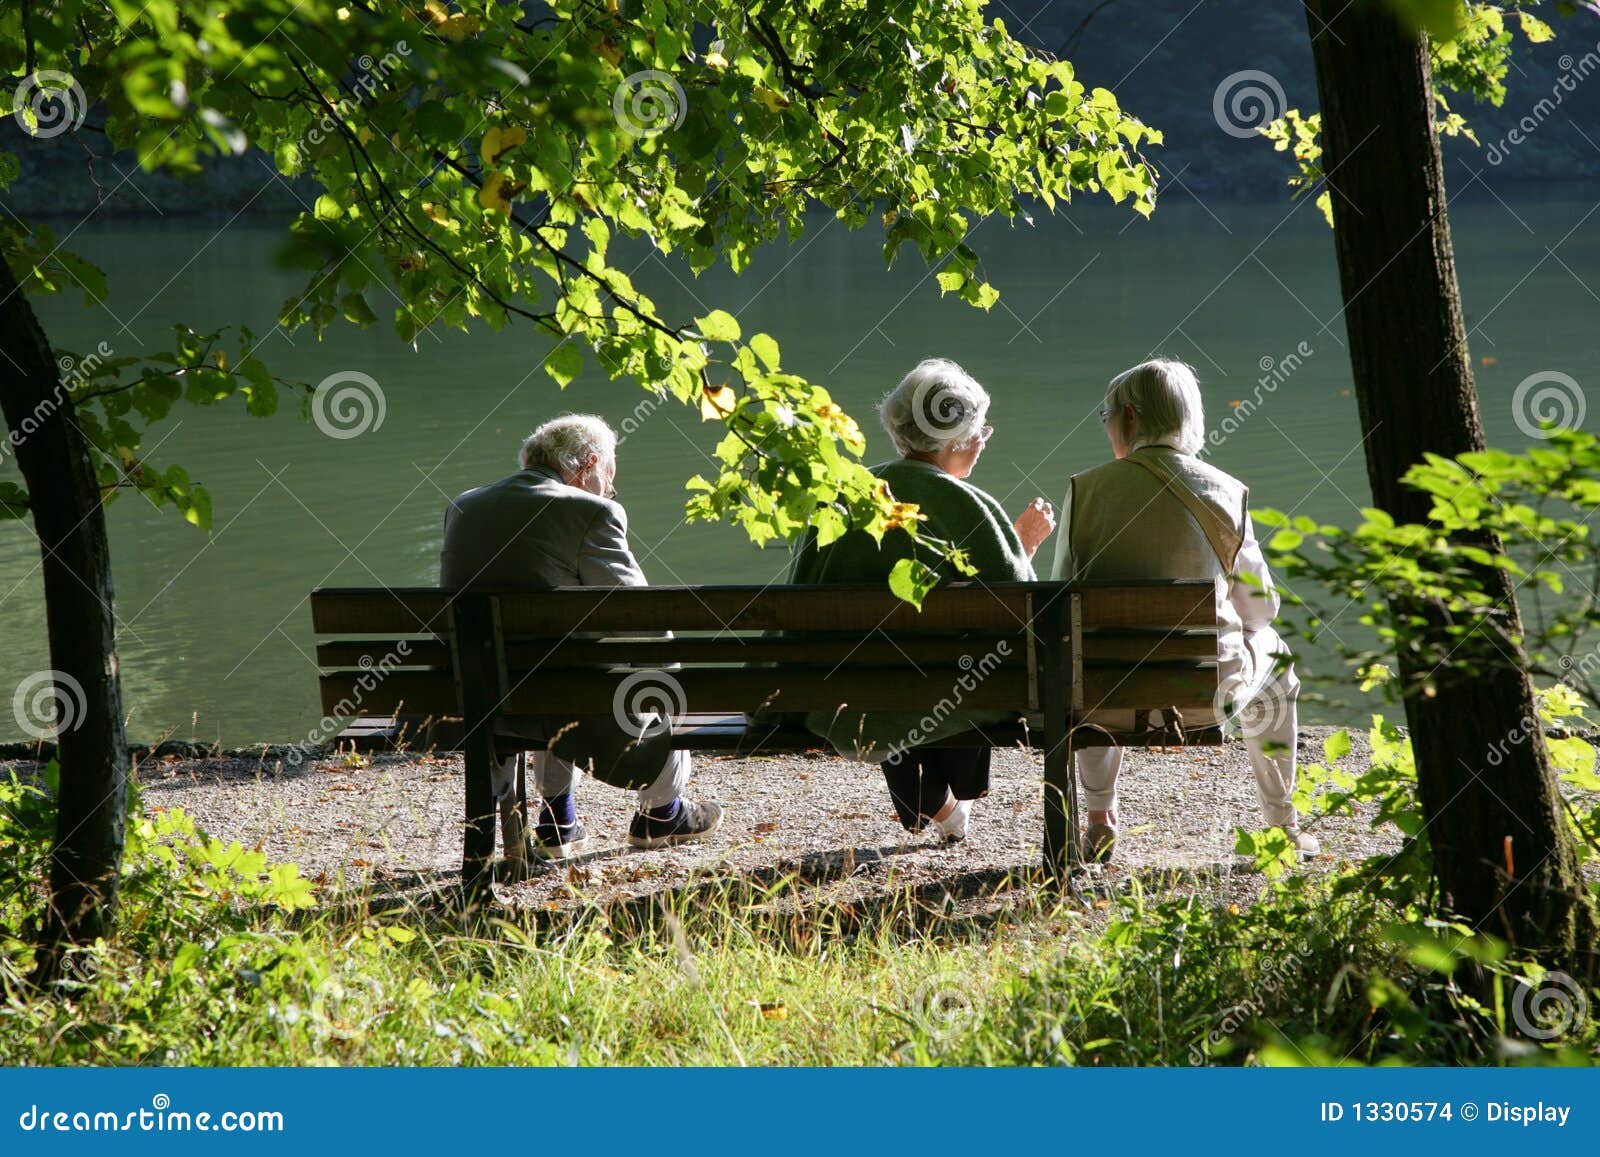 seniors talking in the park